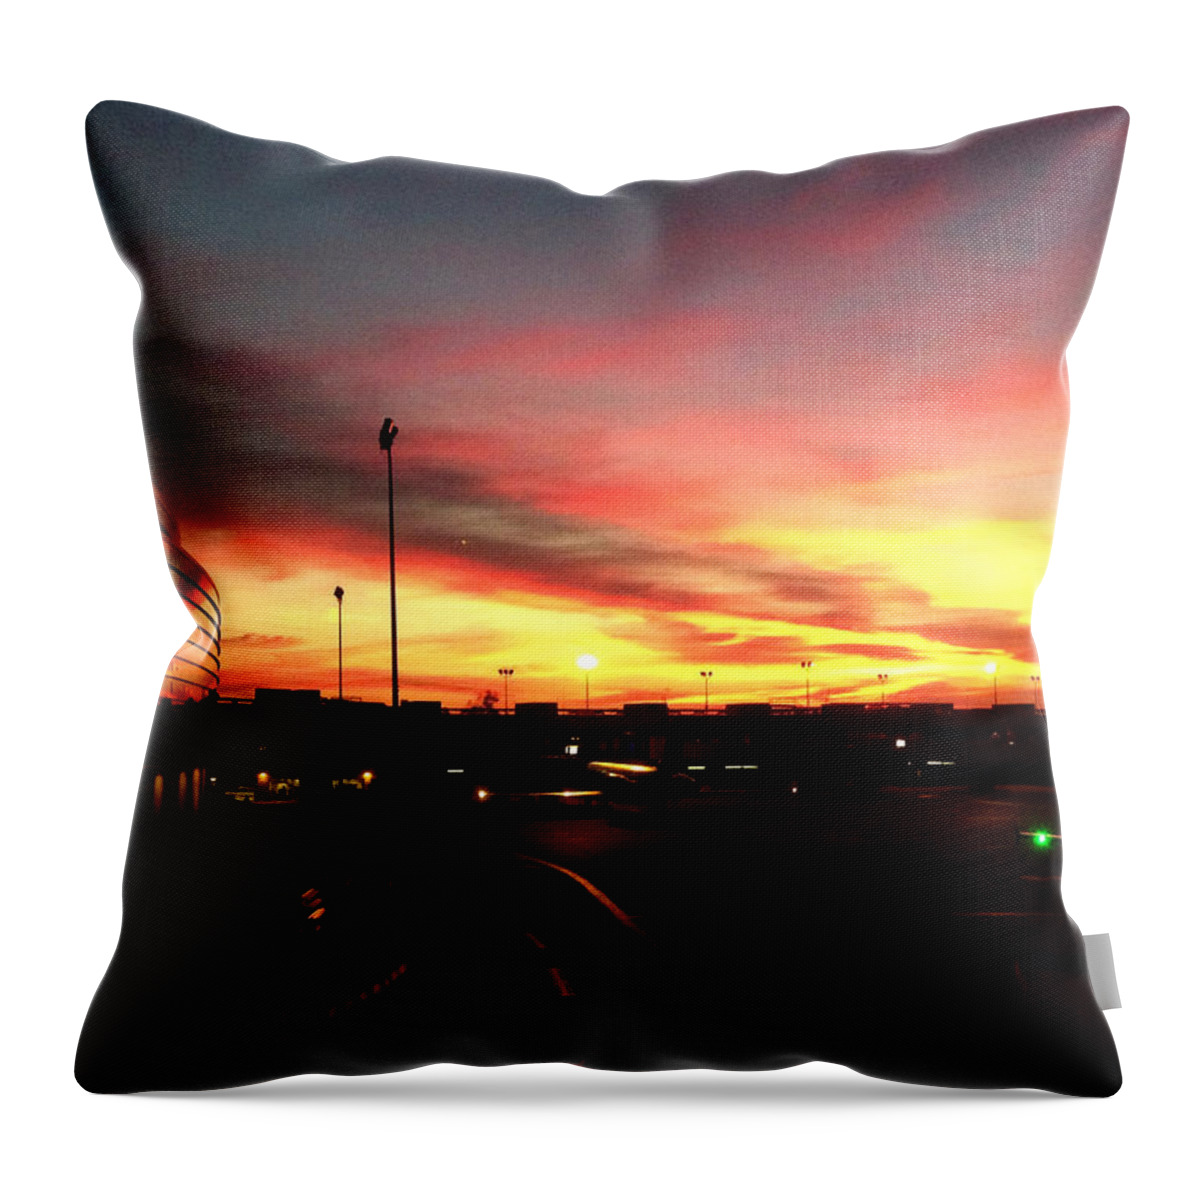 Philadelphia Throw Pillow featuring the photograph Philadelphia - PHL Sunset by Richard Reeve